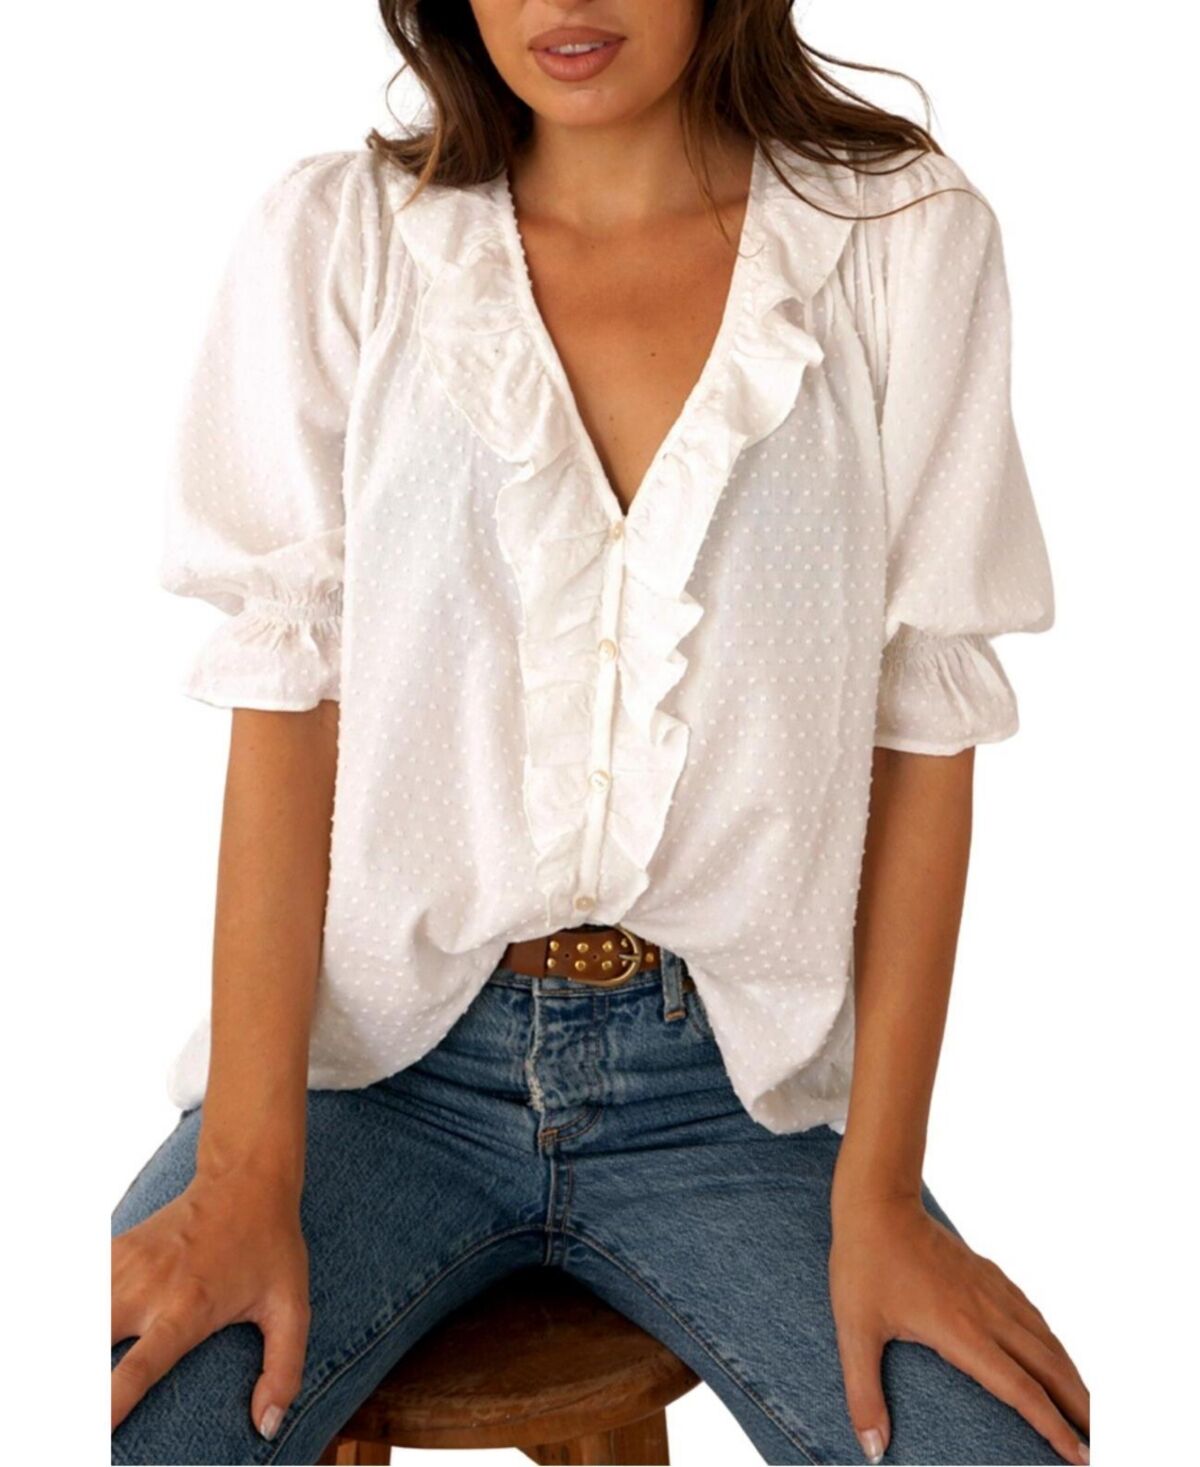 Paneros Clothing Women's Short Sleeve Cotton Chloe Shirt - Off white